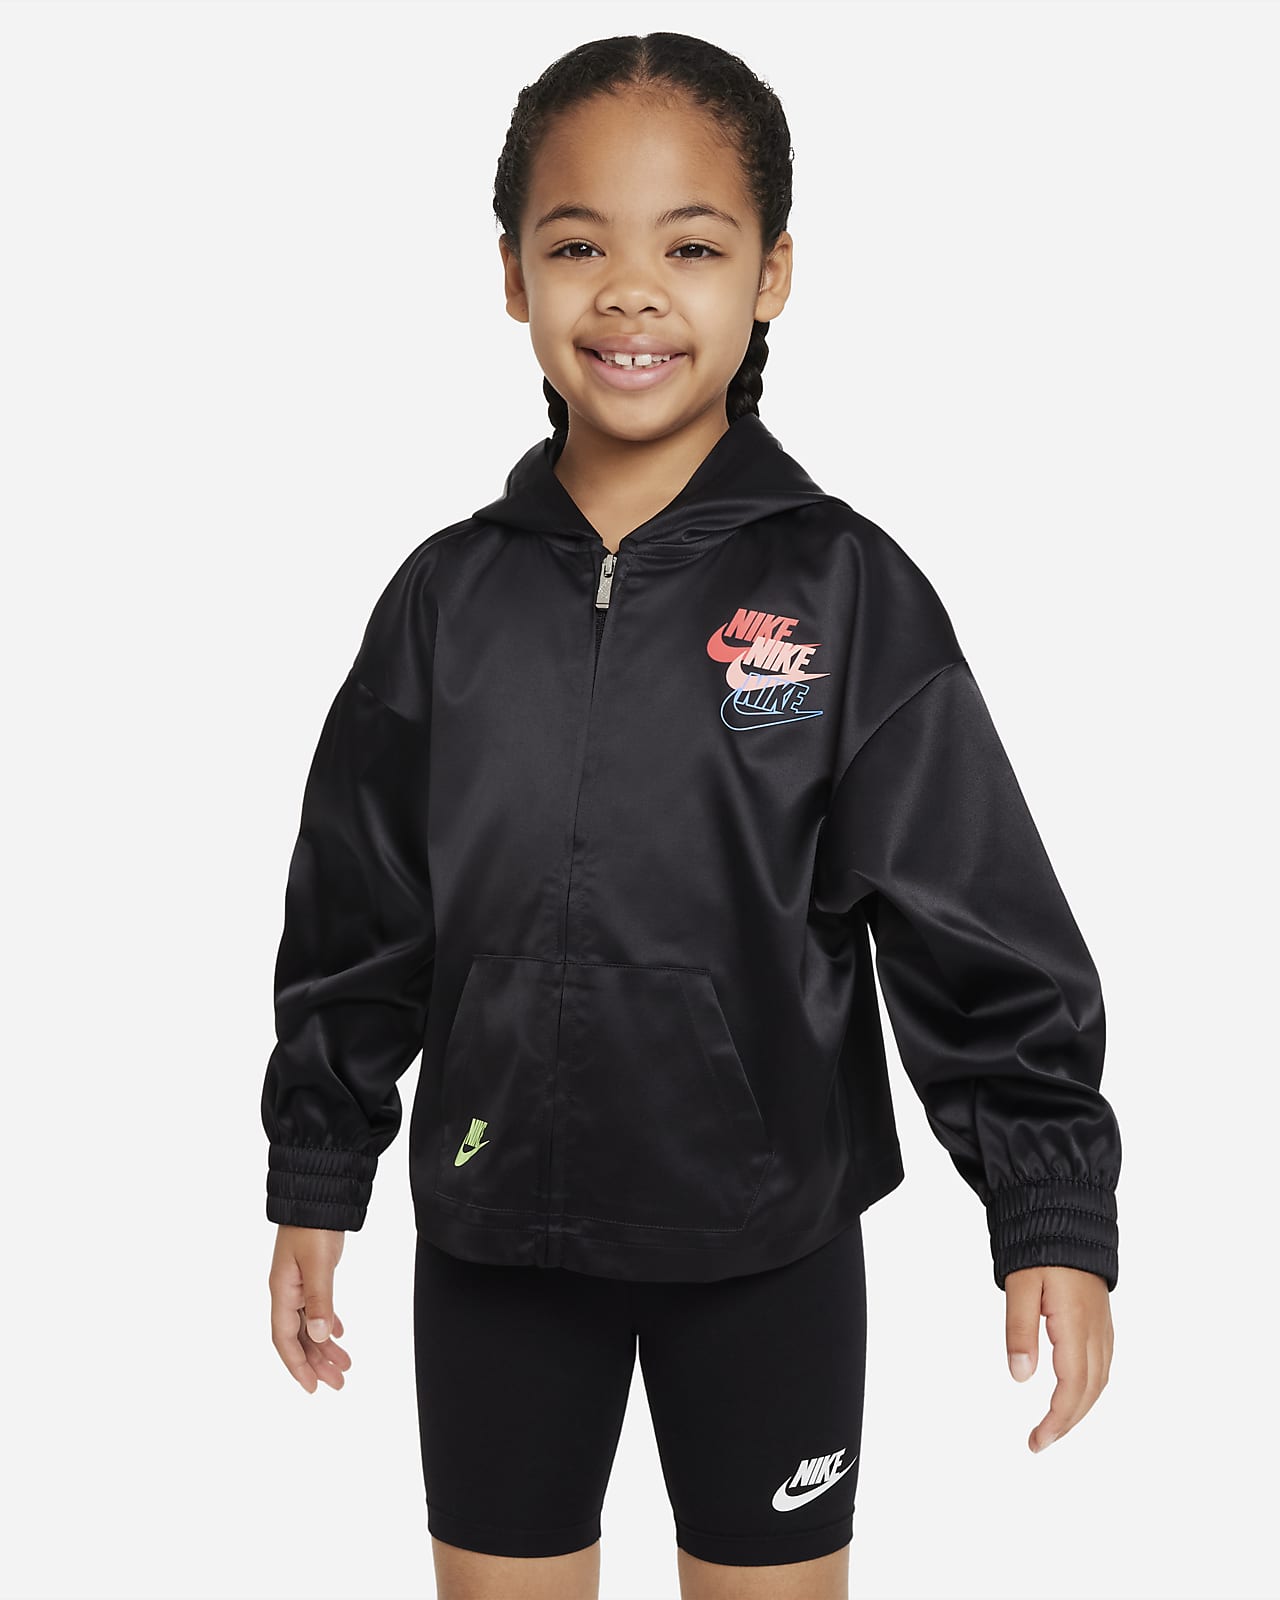 Nike Younger Kids' Glowtime Sateen Jacket